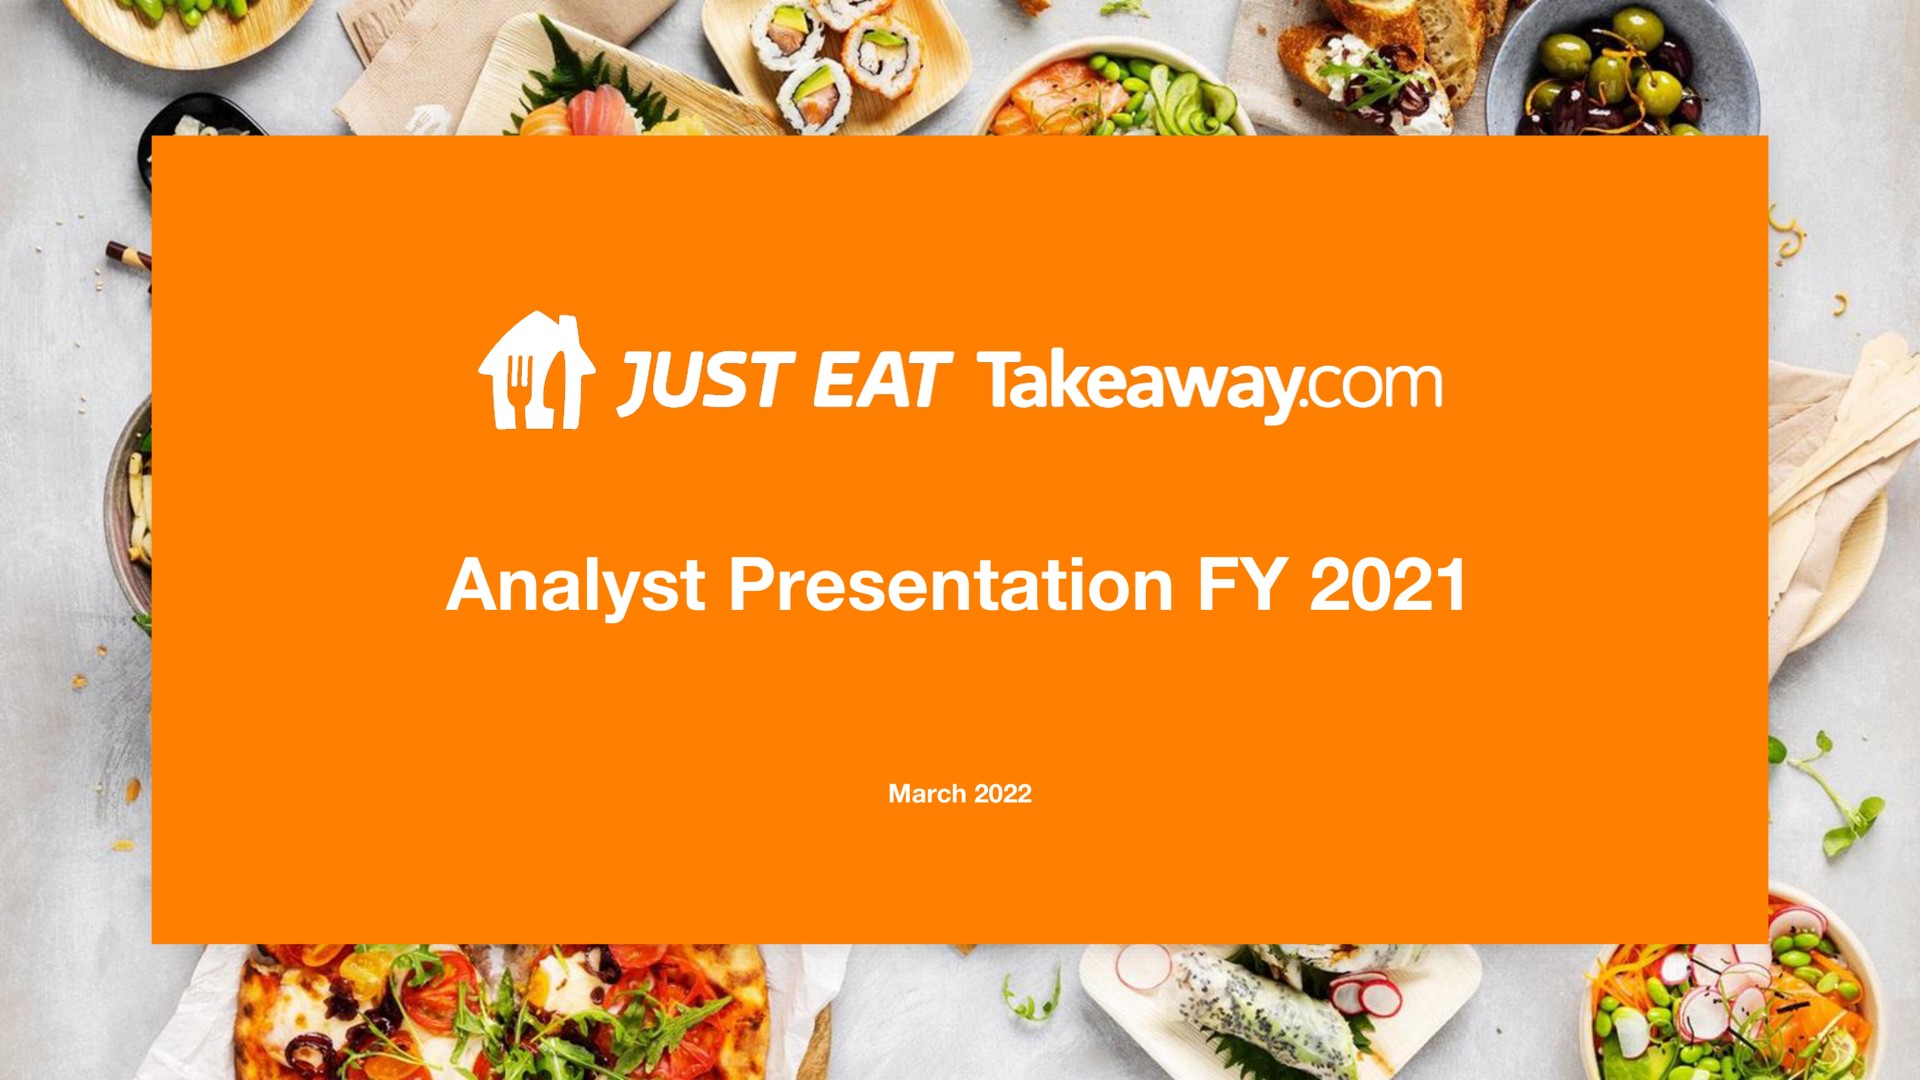 analyst presentation just eat | Just Eat Takeaway.com